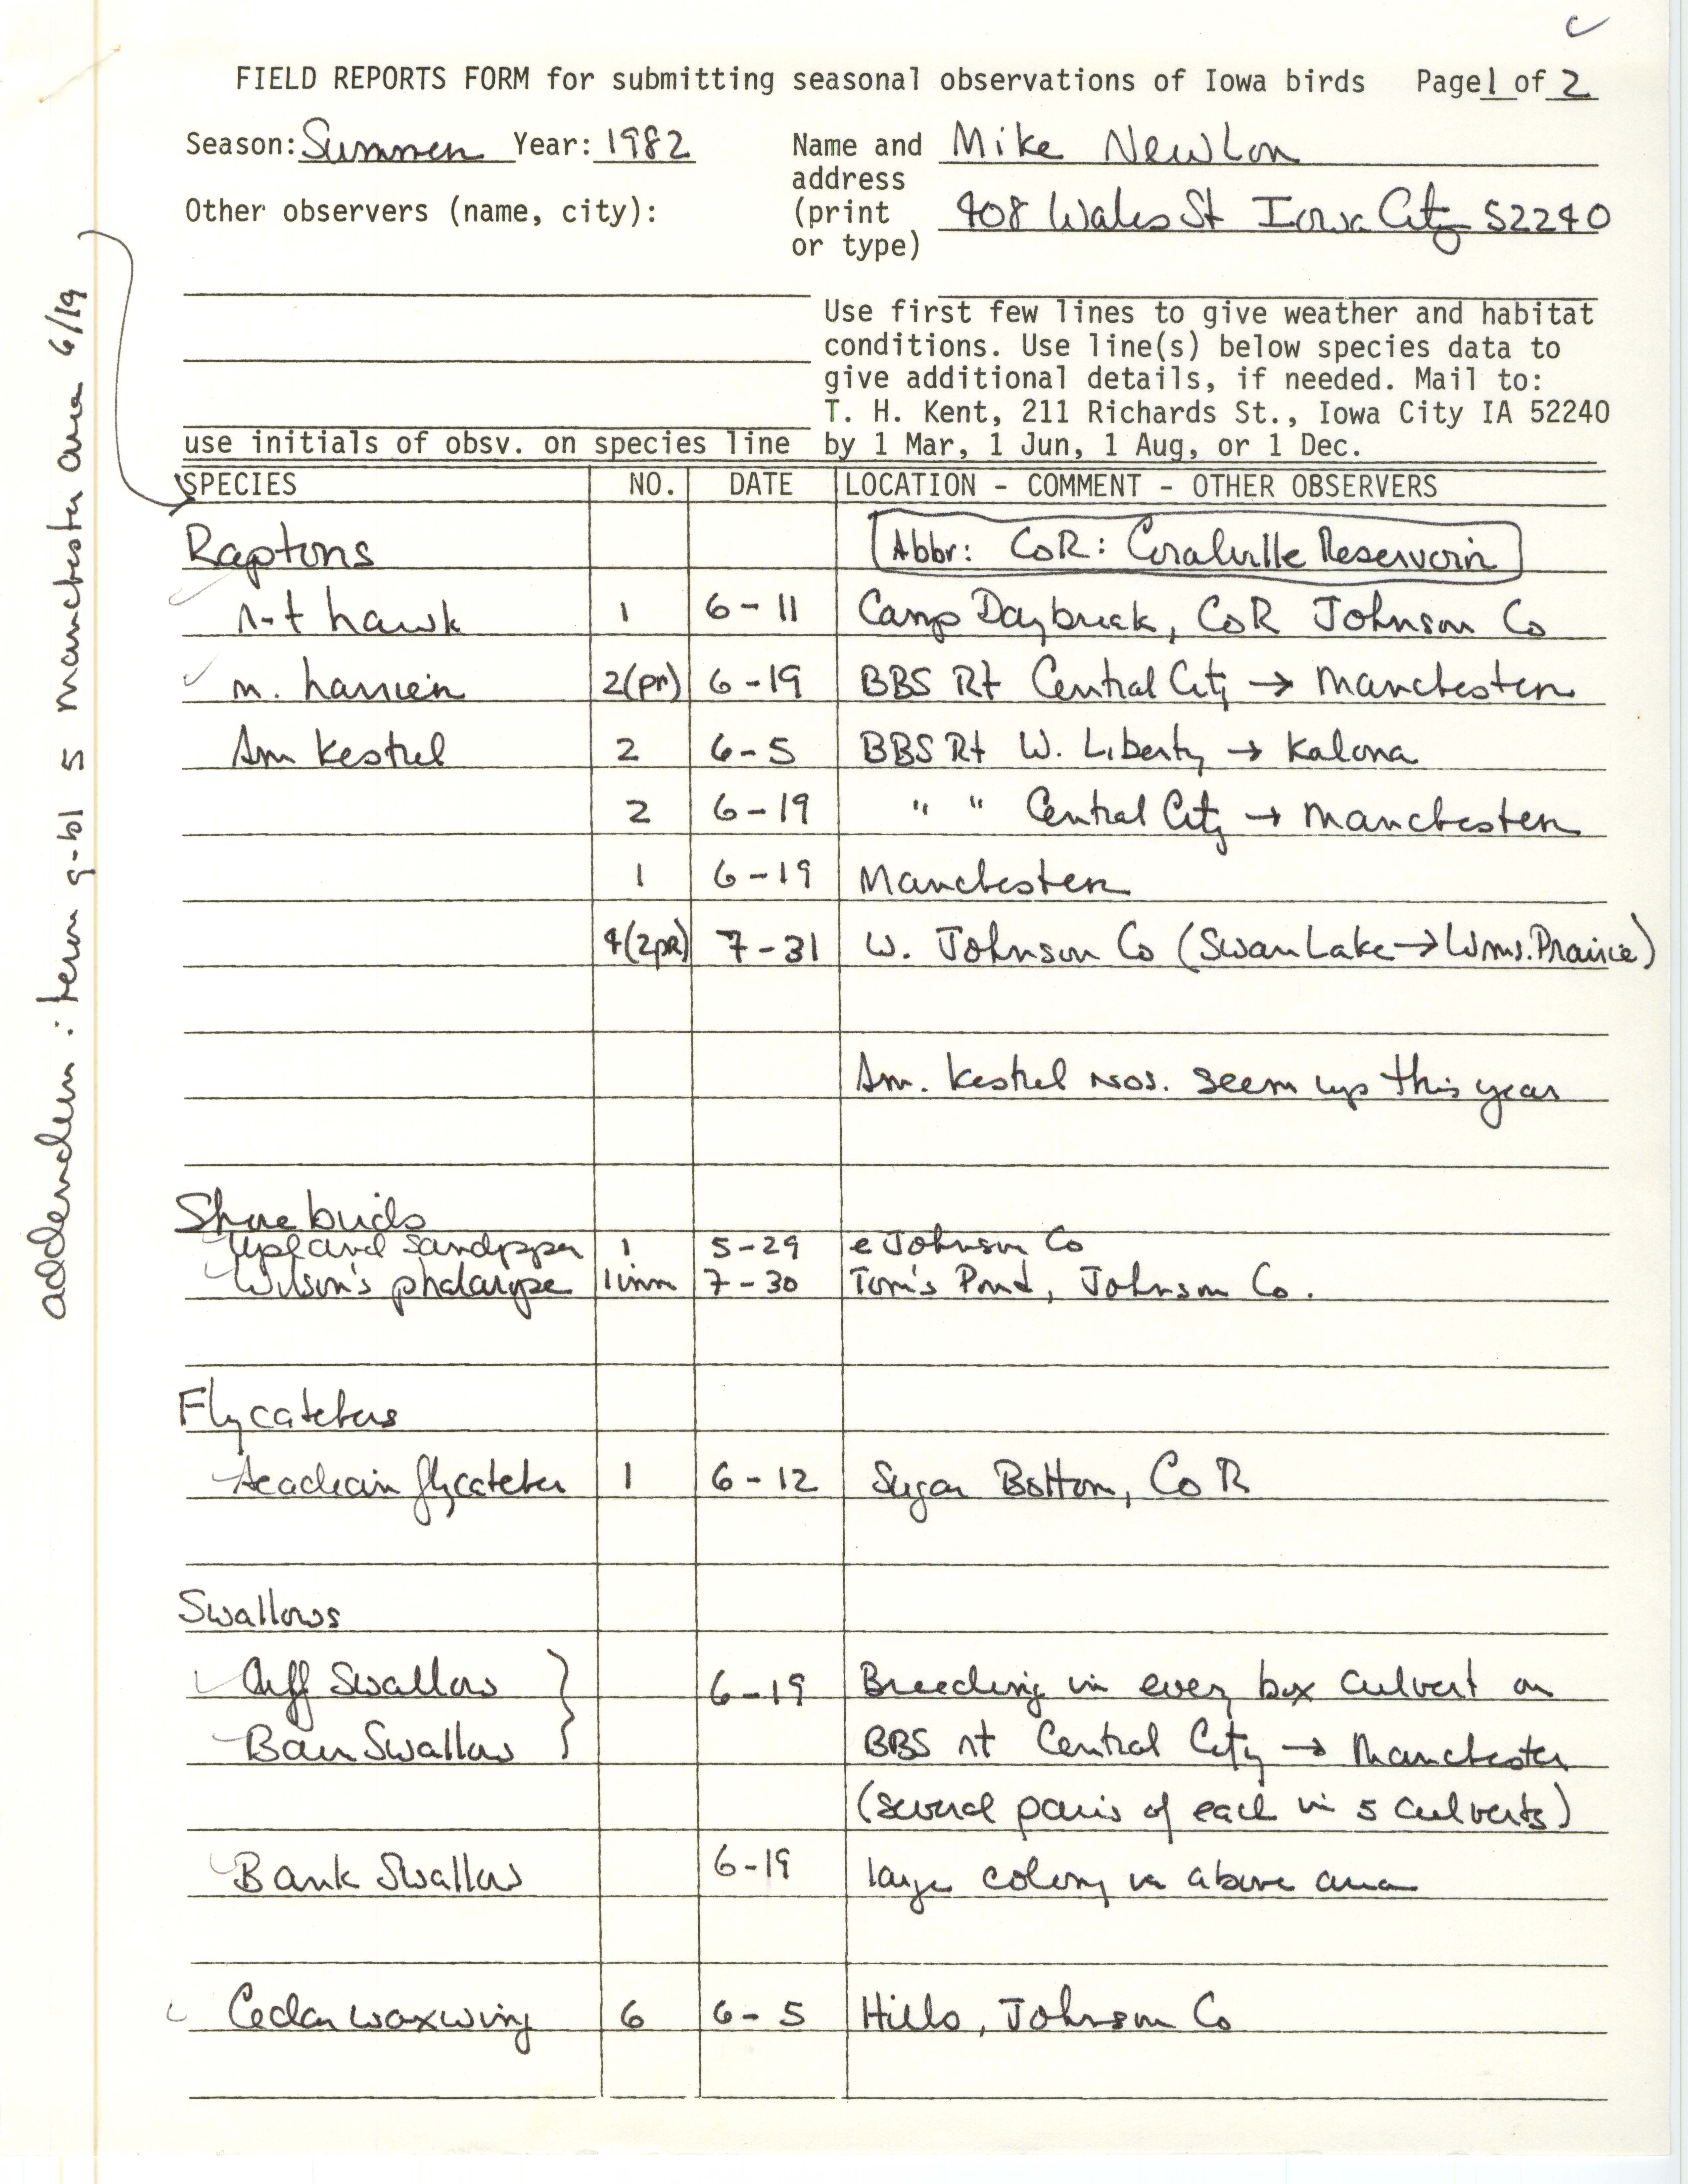 Field report contributed by Michael C. Newlon, summer 1982